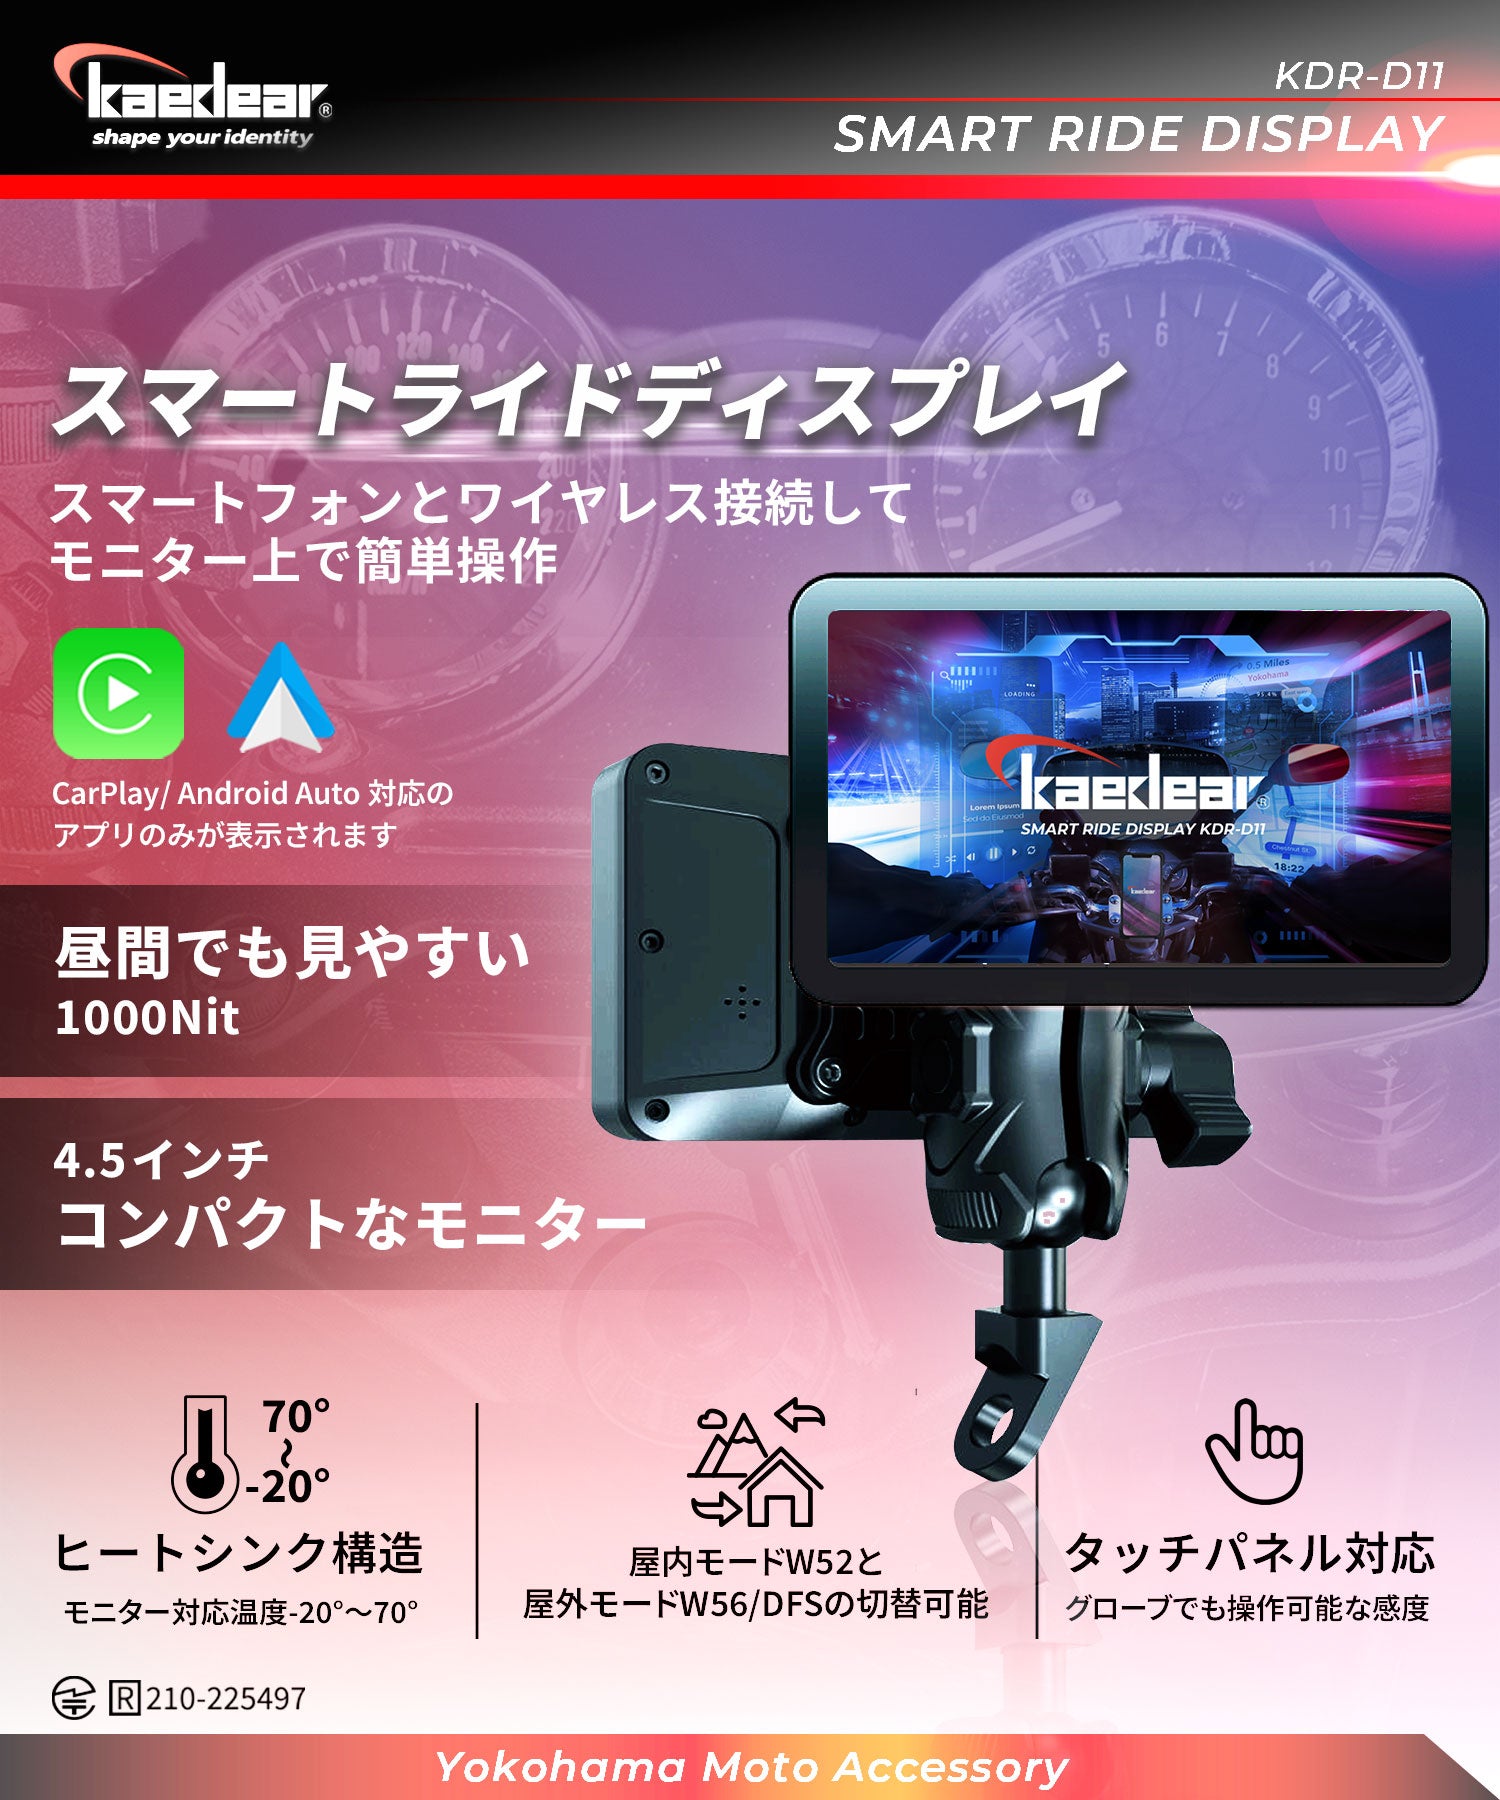 5GhzWi-Fi【新品】Kaedear カエディア KDR-D11 スマートライドディスプレイ